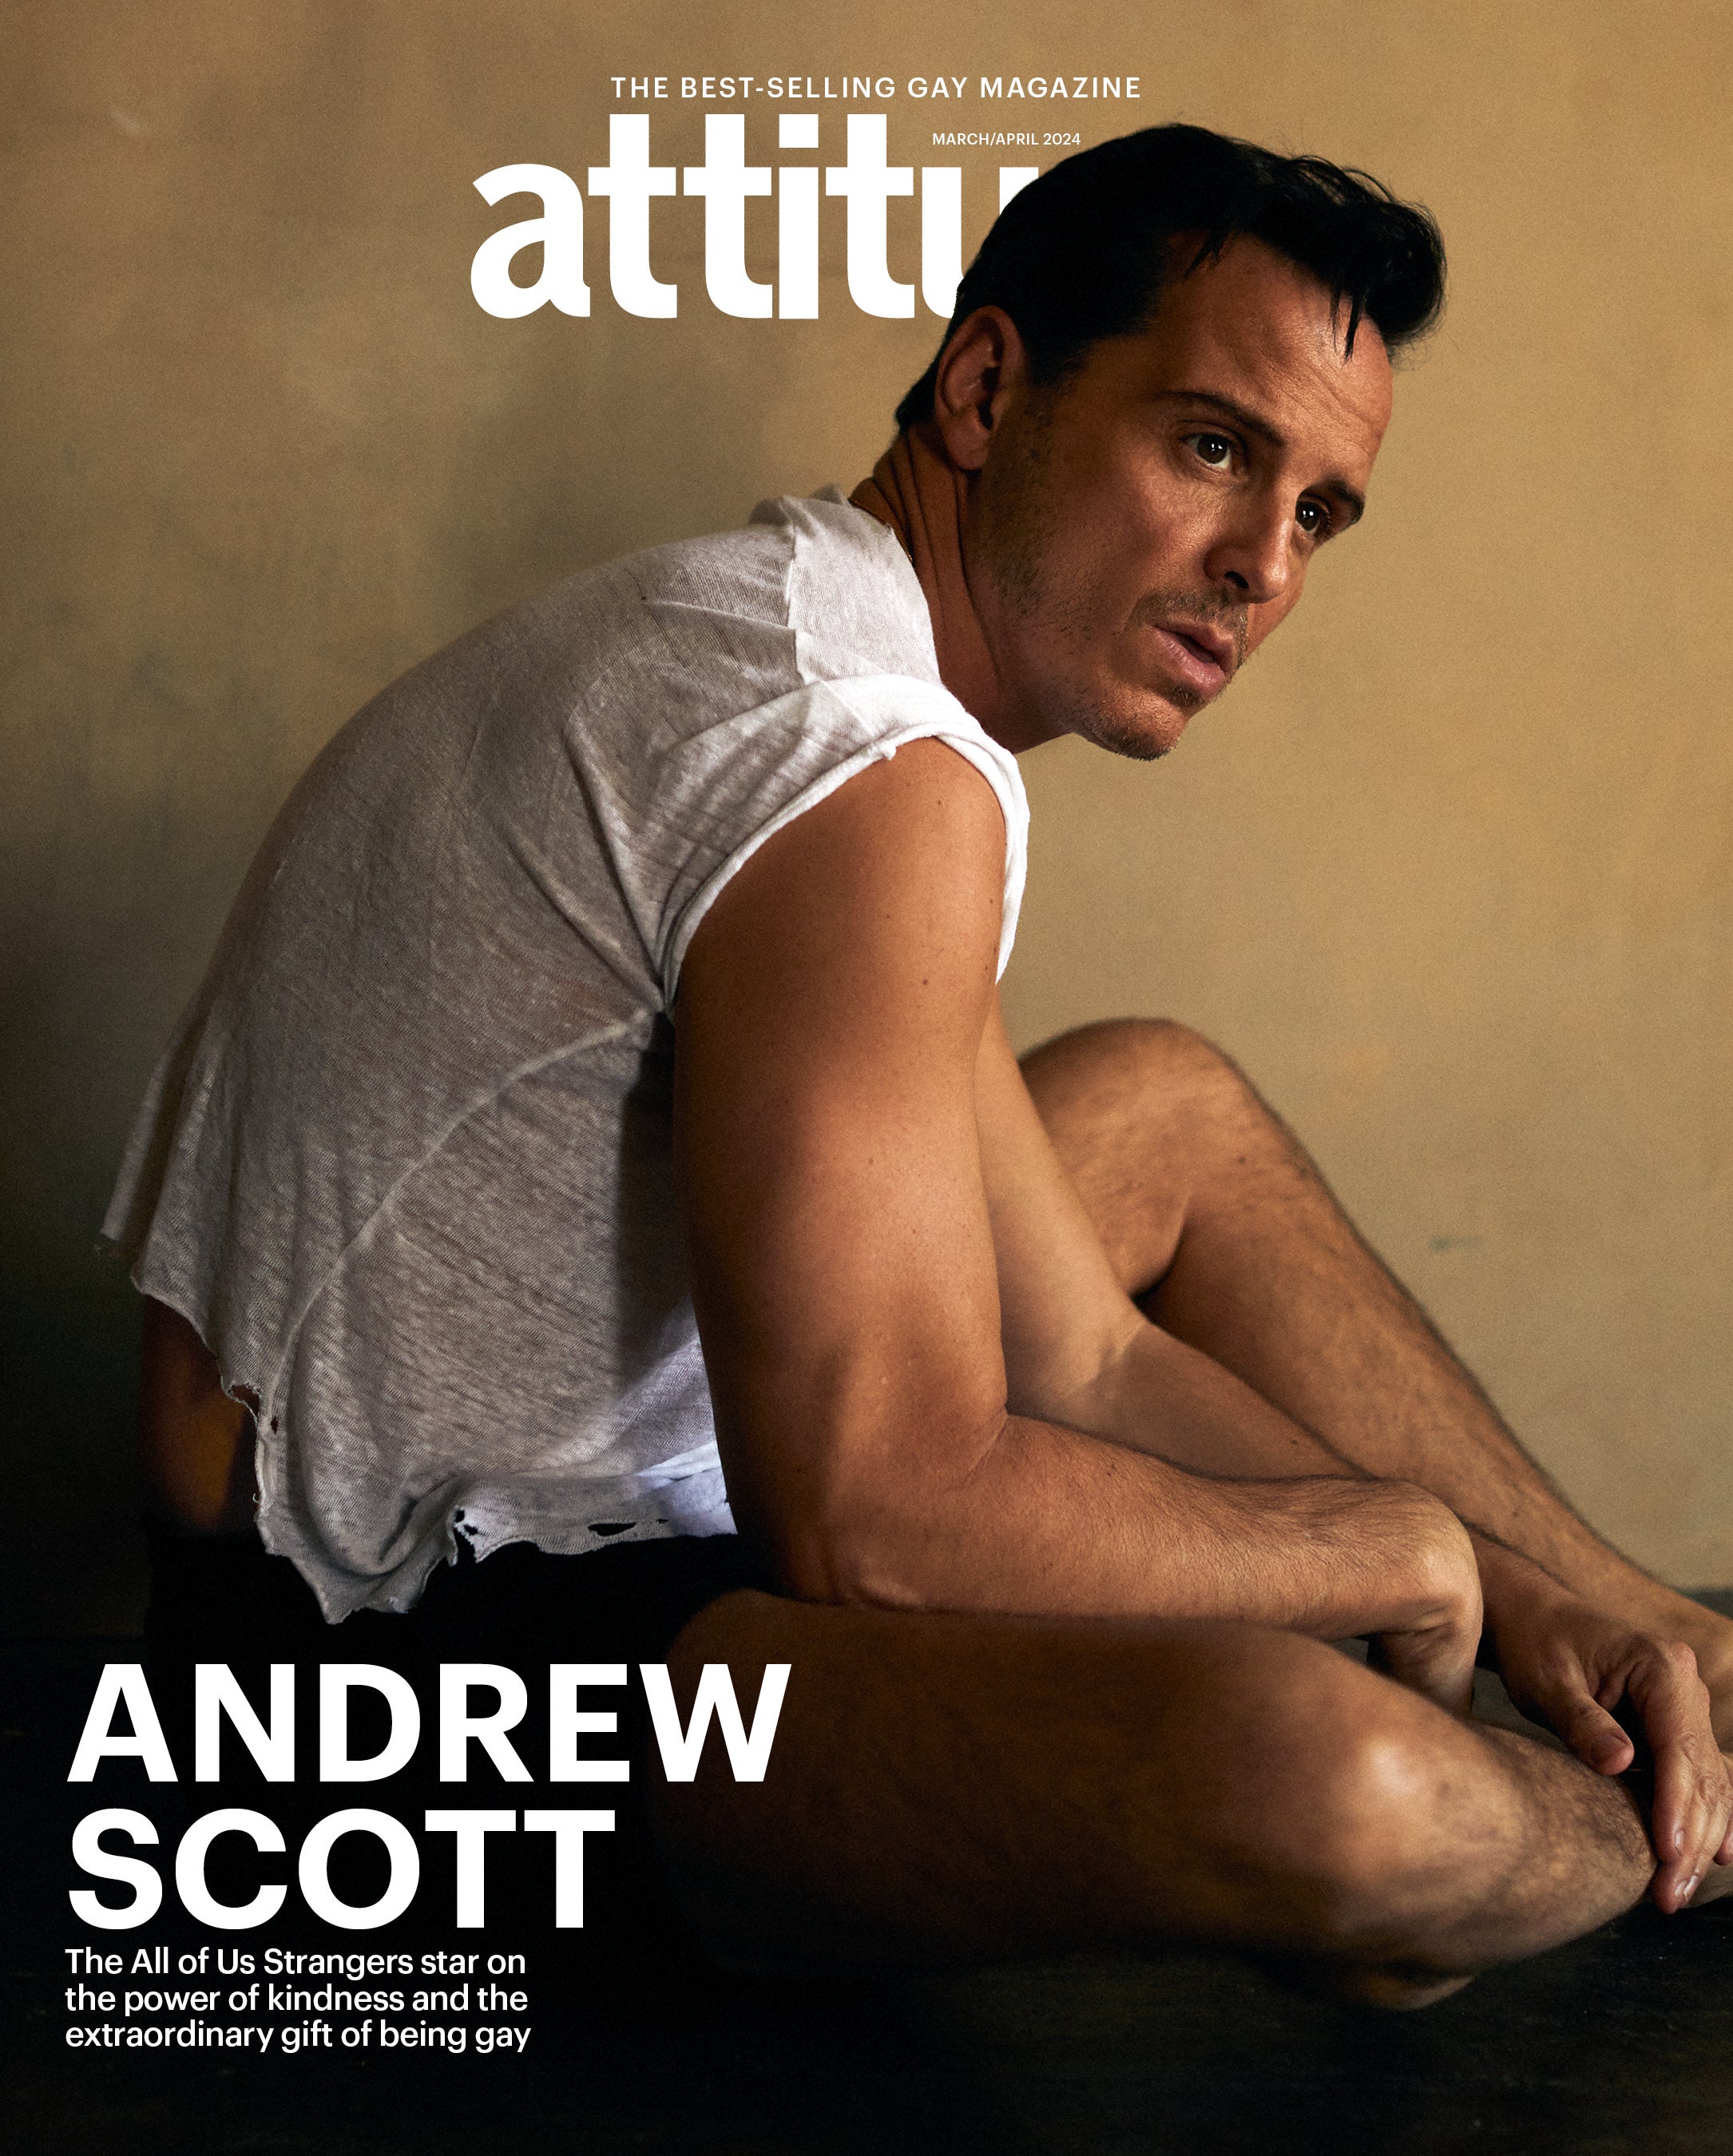 Andrew Scott on the cover of Attitude magazine